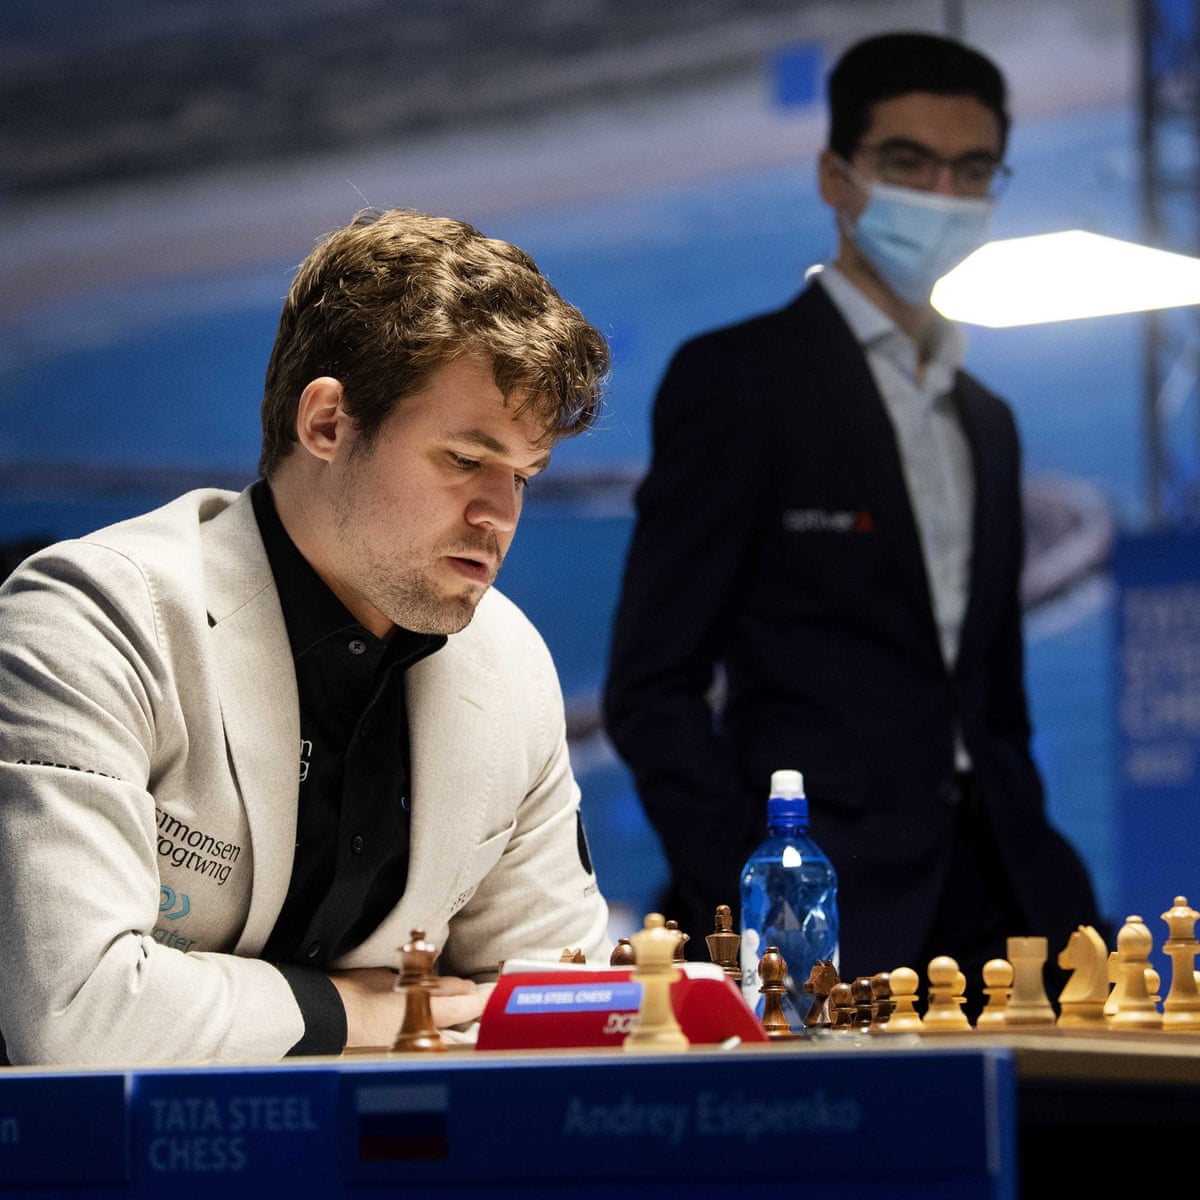 Supi Crushes Magnus Carlsen in 18 Moves! 